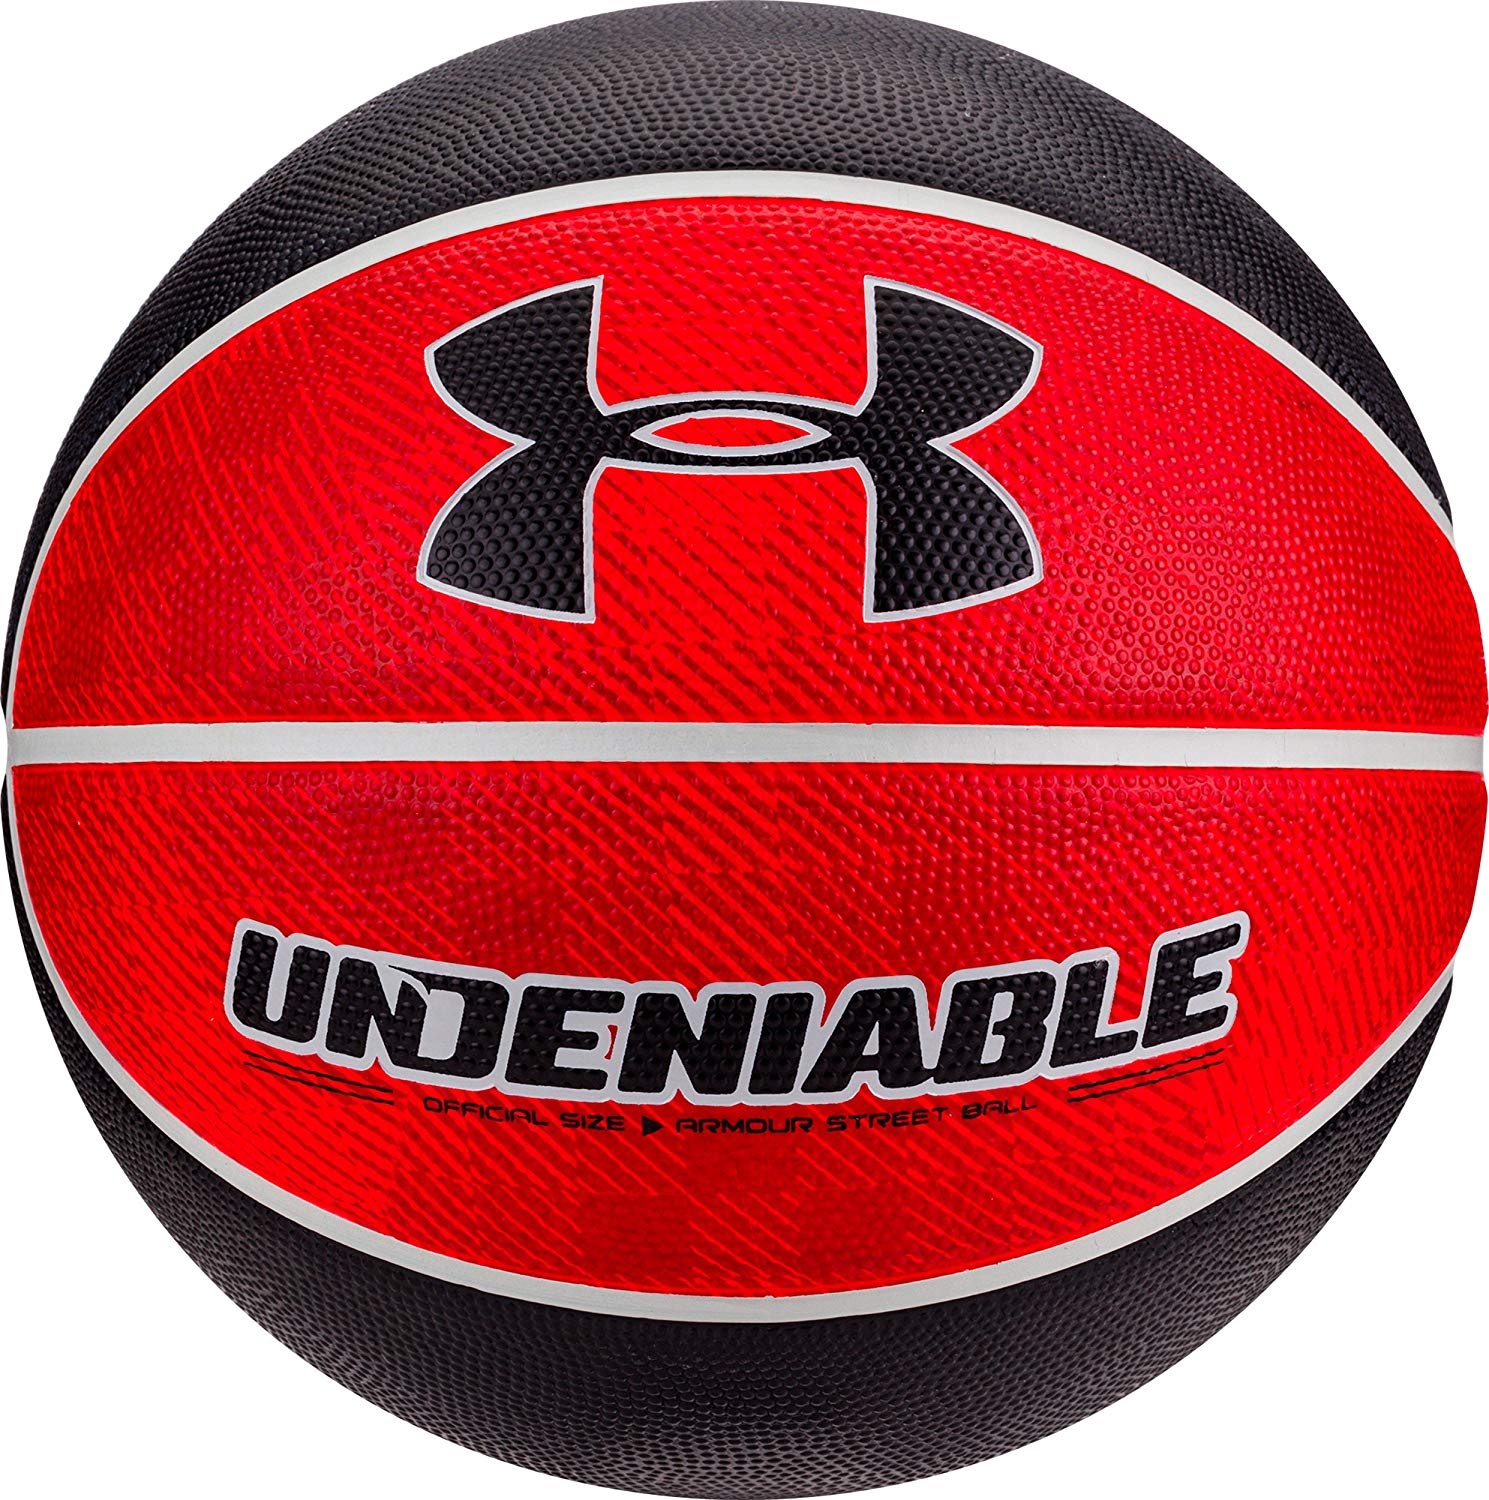 under armor basketball